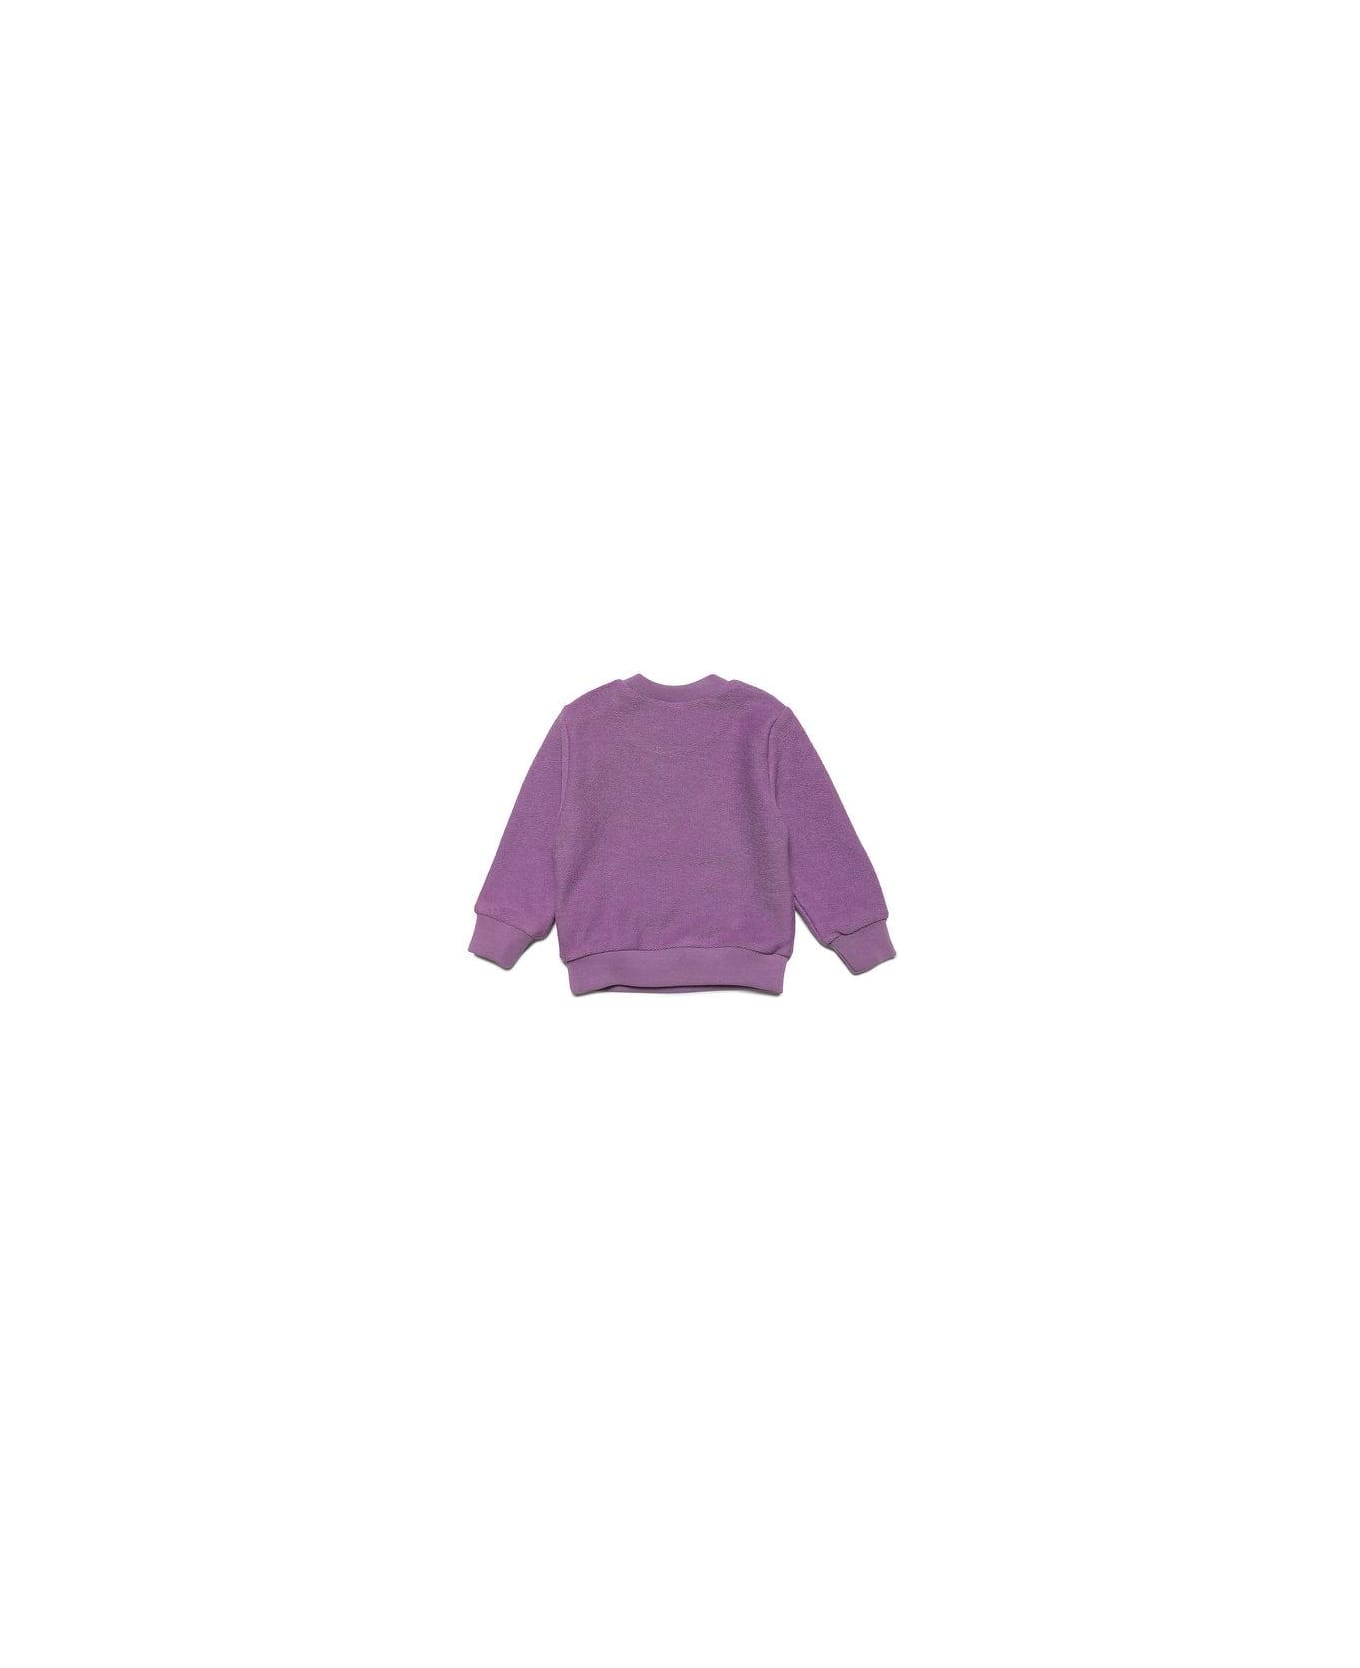 Dsquared2 Sweatshirt With Print - Wisteria ニットウェア＆スウェットシャツ